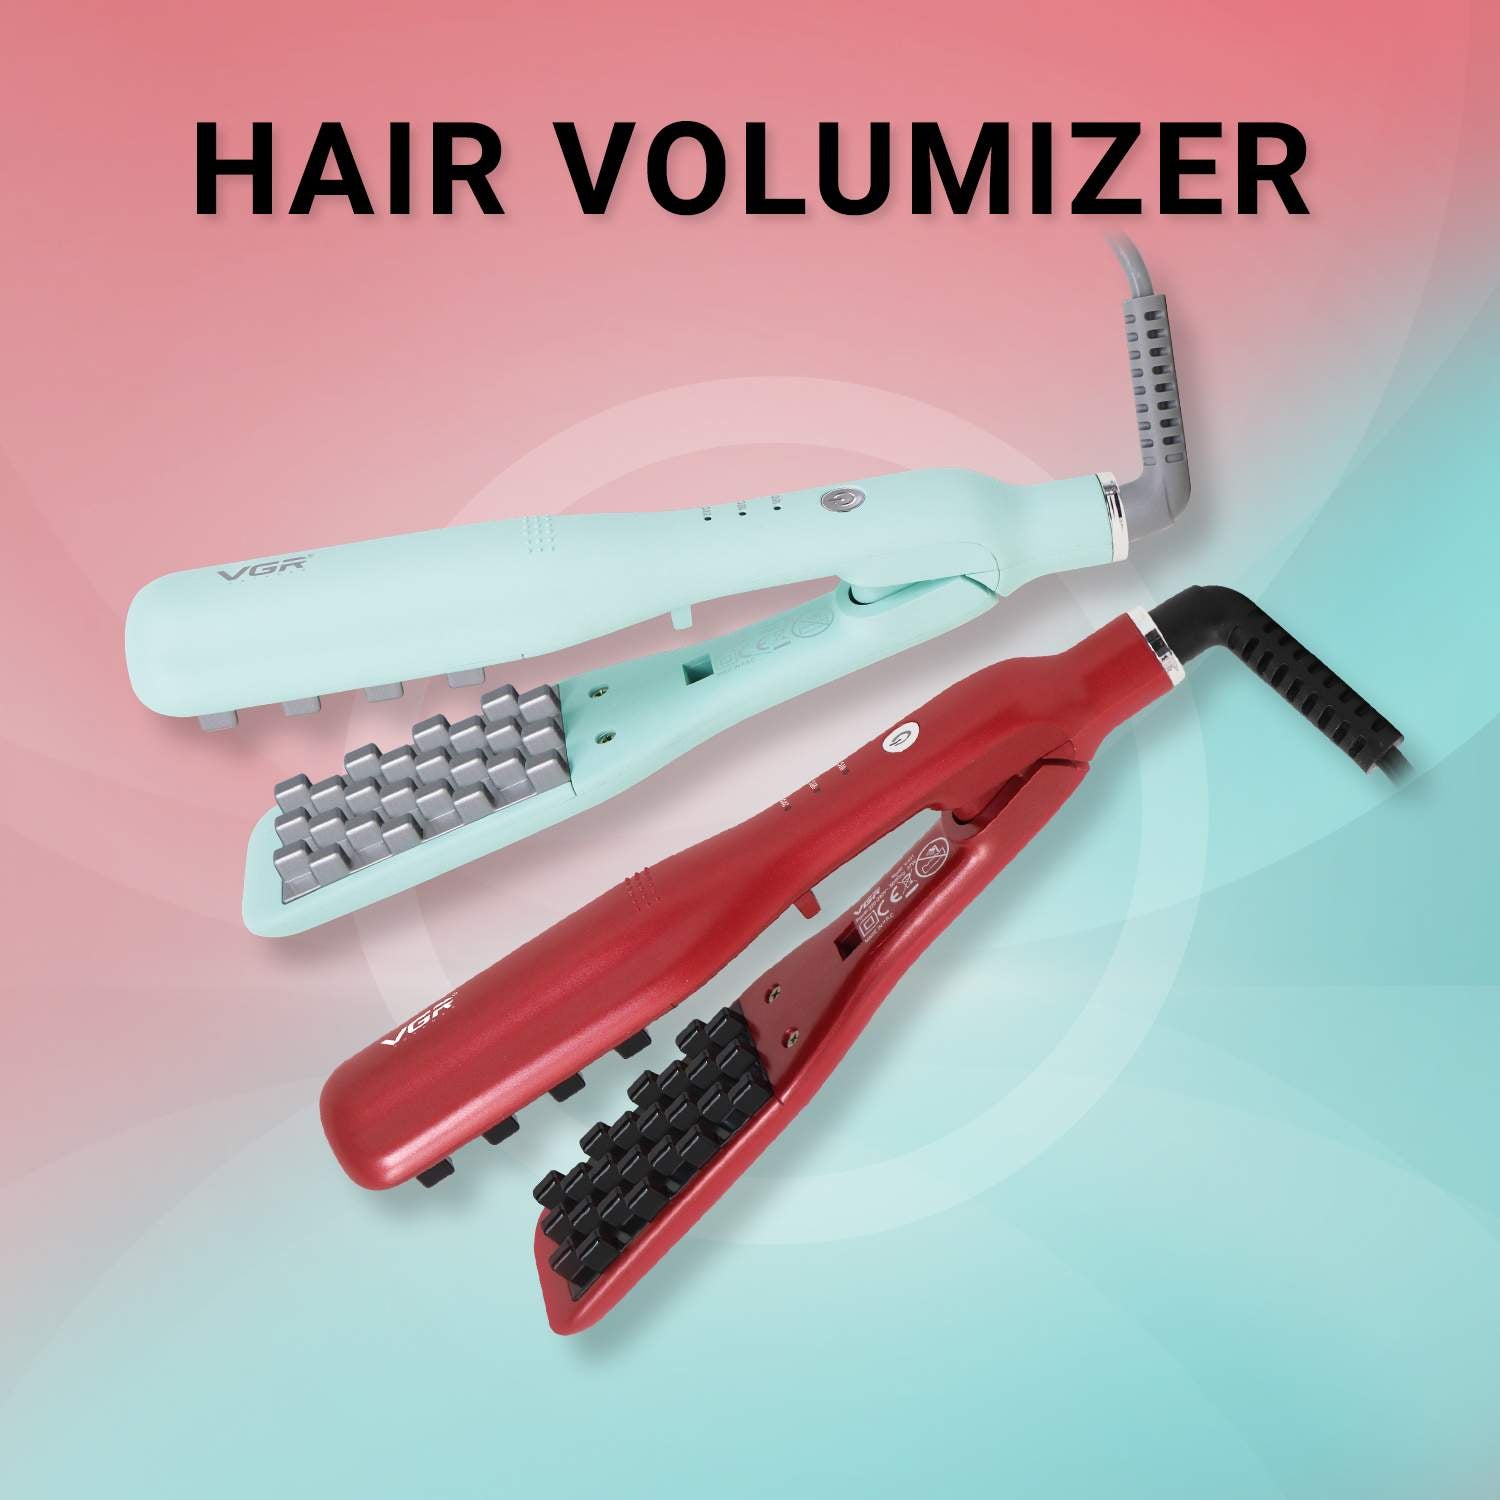 Hair Volumizer - VGR Official India